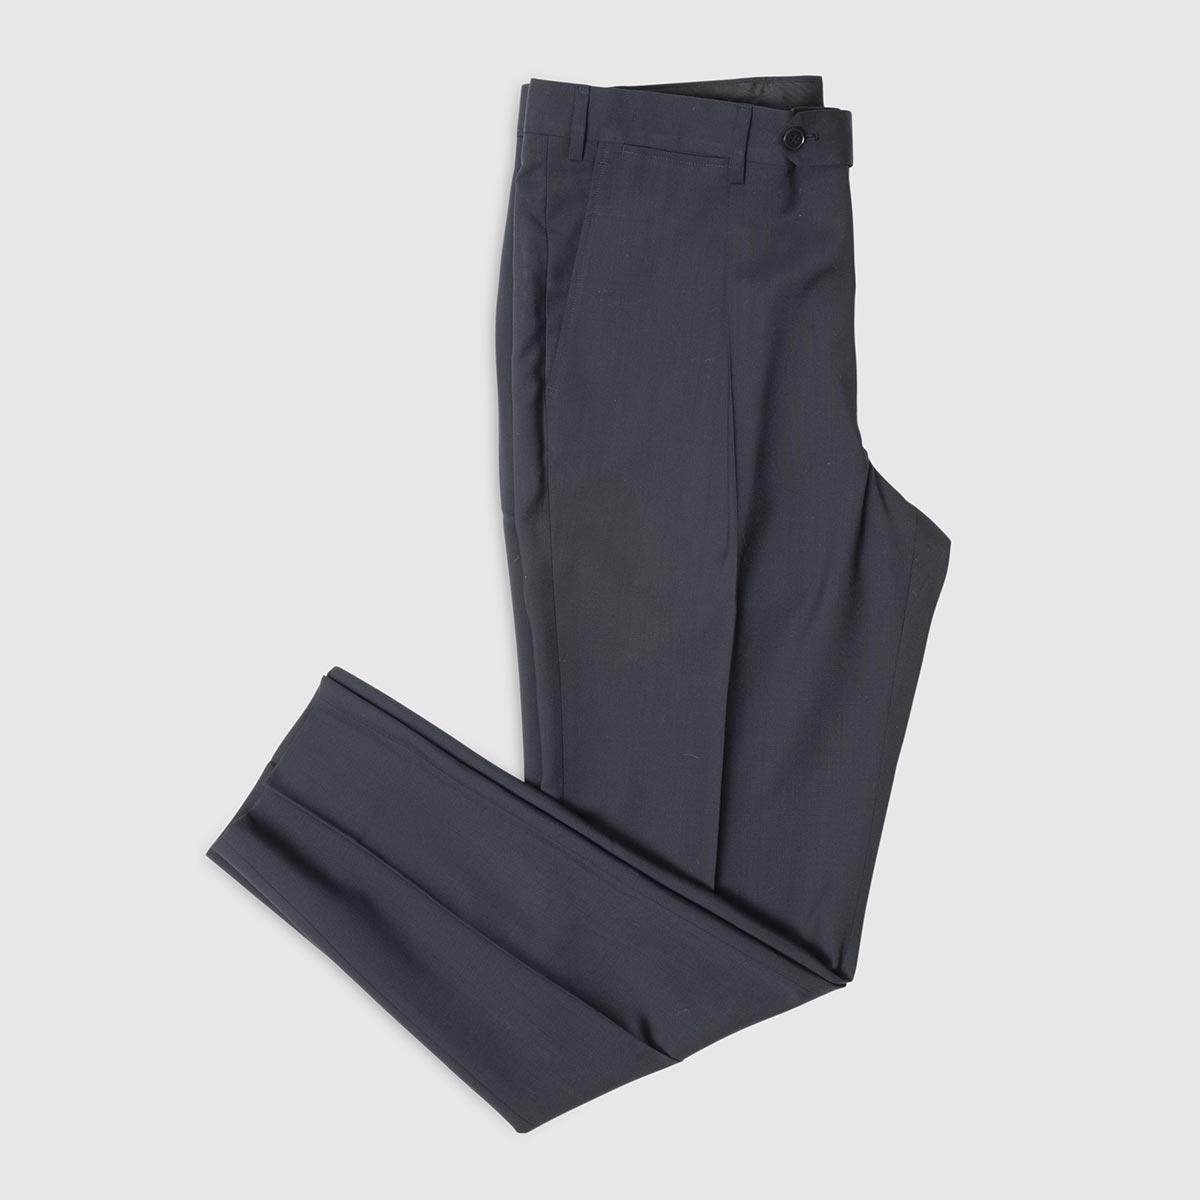 1 Pleat Super 100’s Wool Trousers in Dark Navy Sartoria Lavore on sale 2022